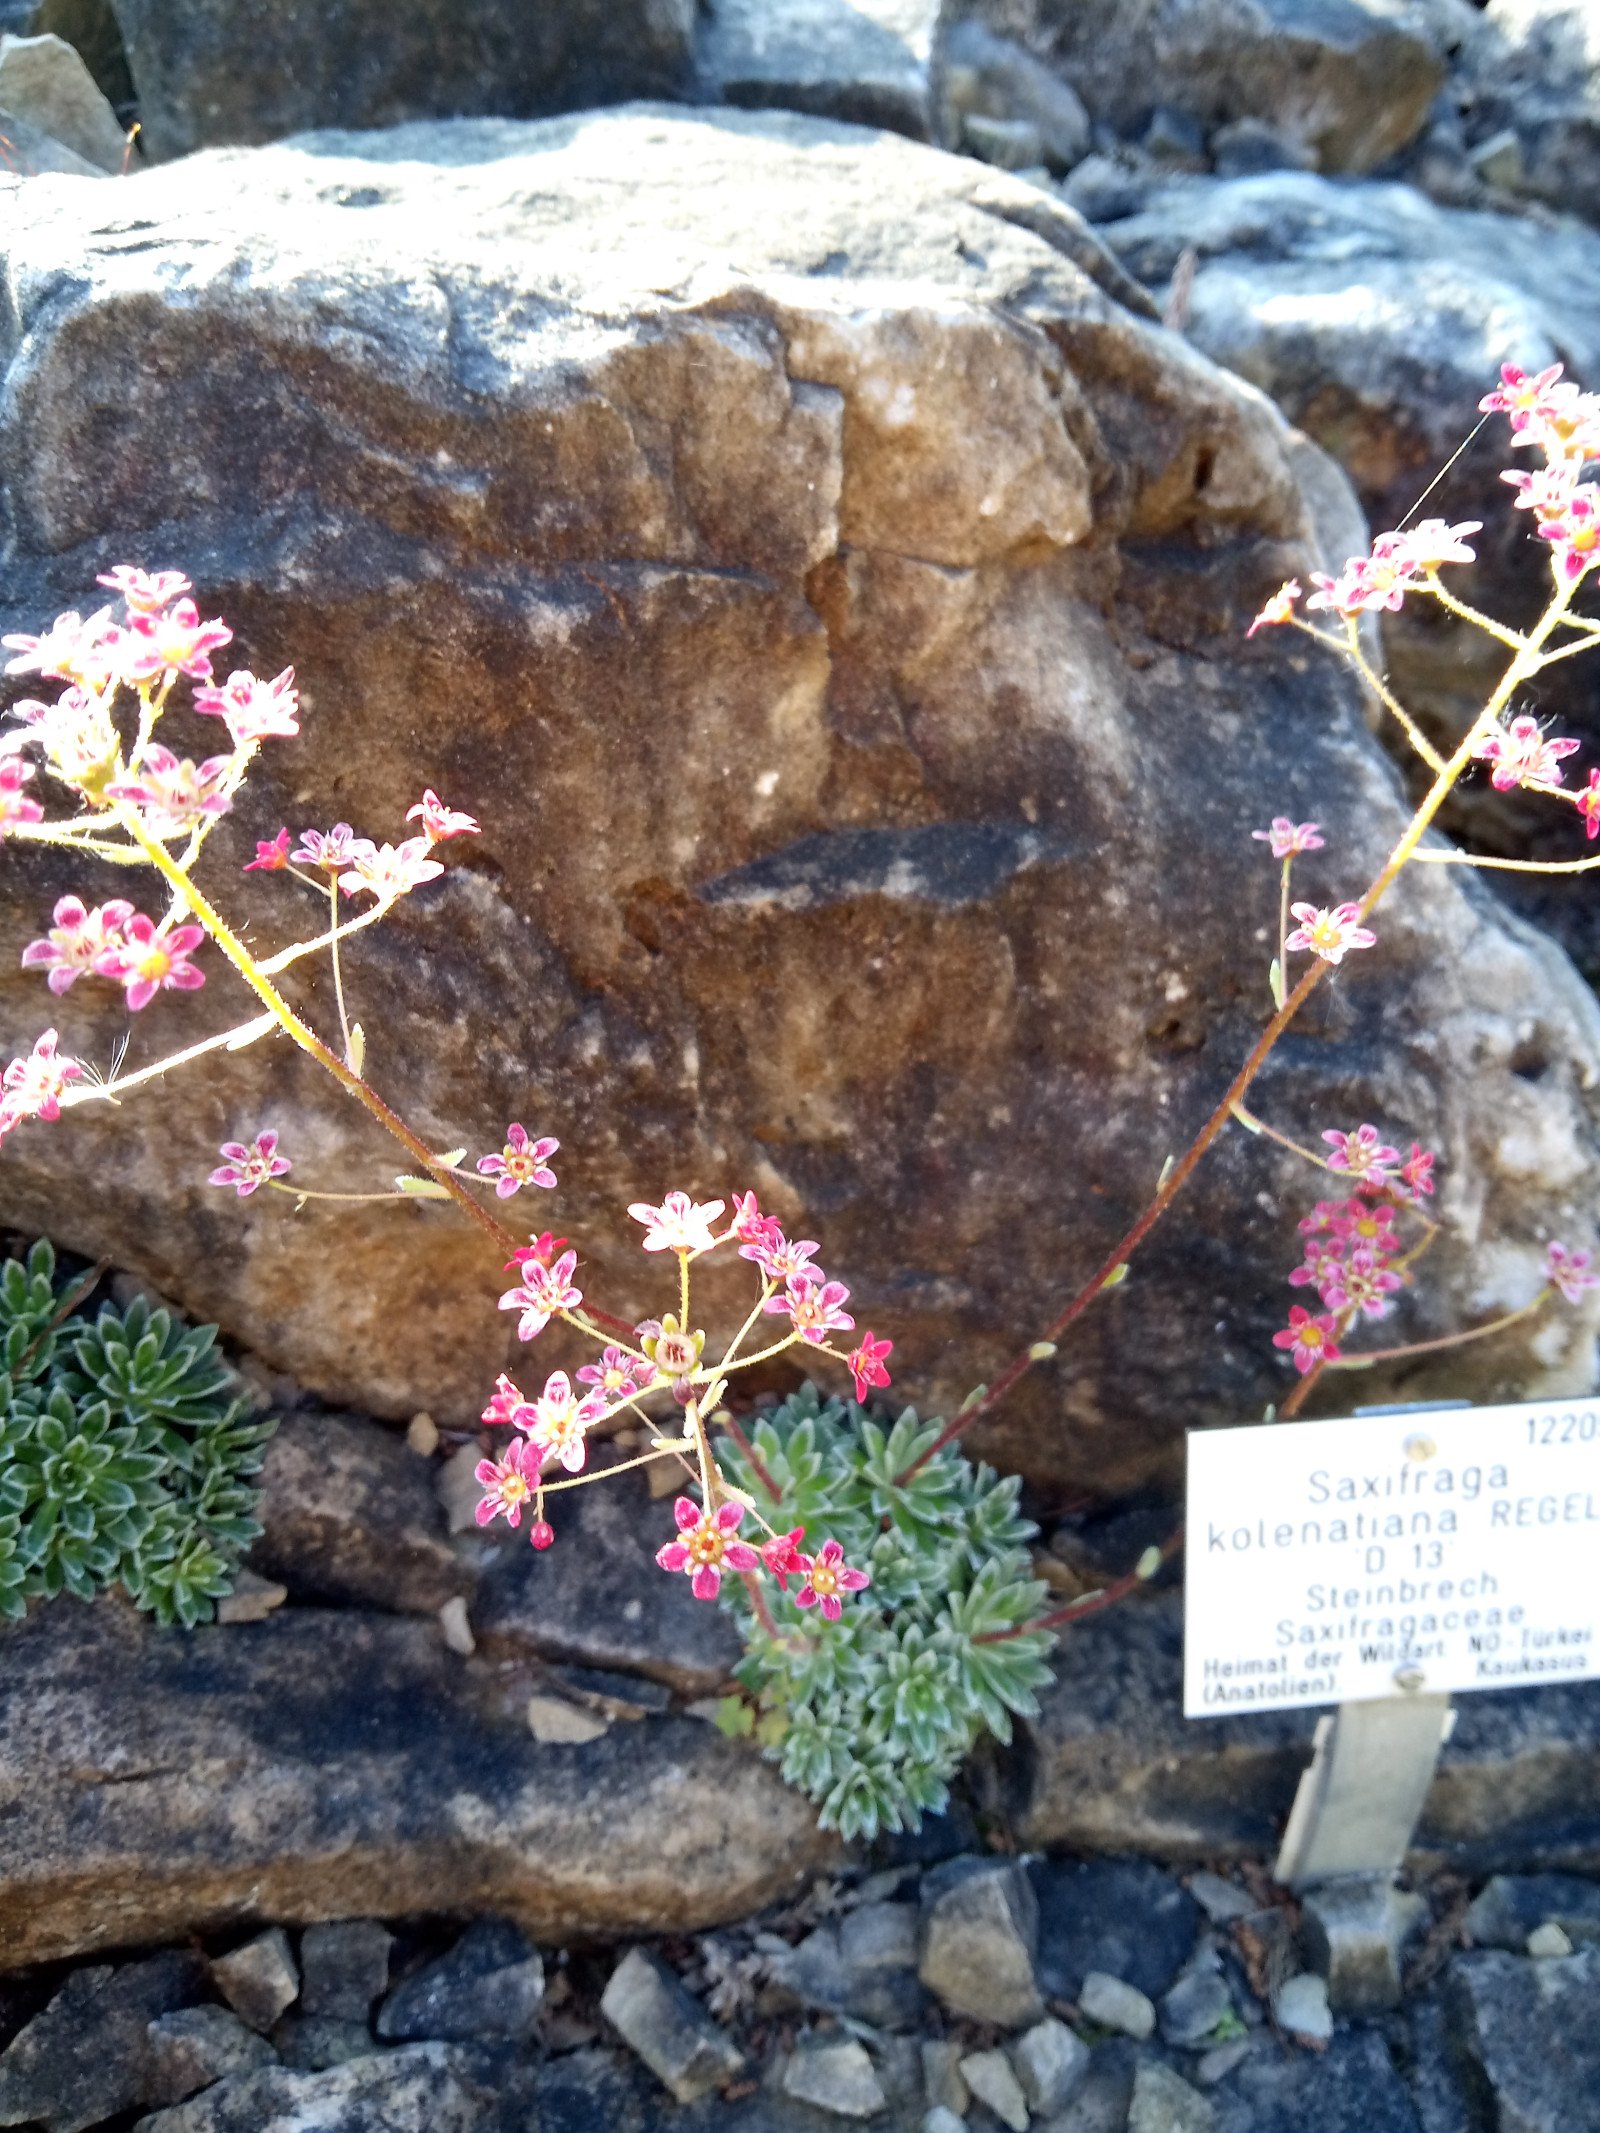 Saxifraga paniculata - Entire plant